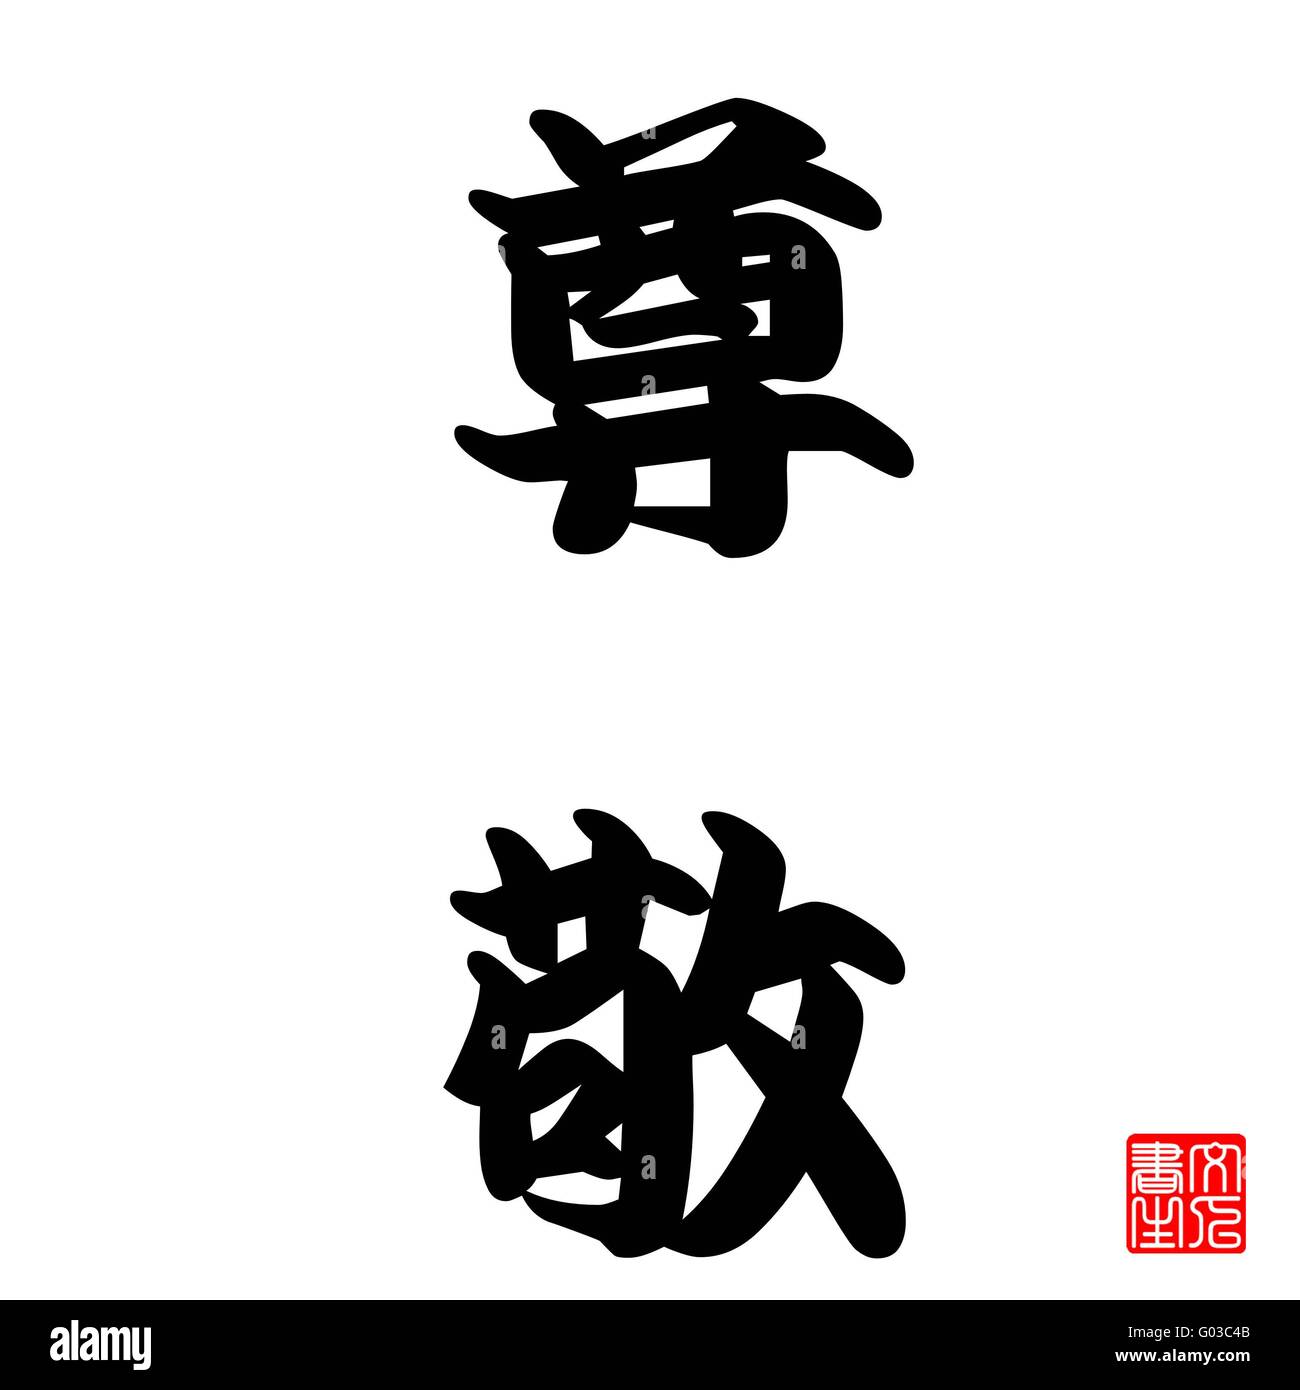 Japanese Calligraphy Sonkei (Respect) Stock Photo